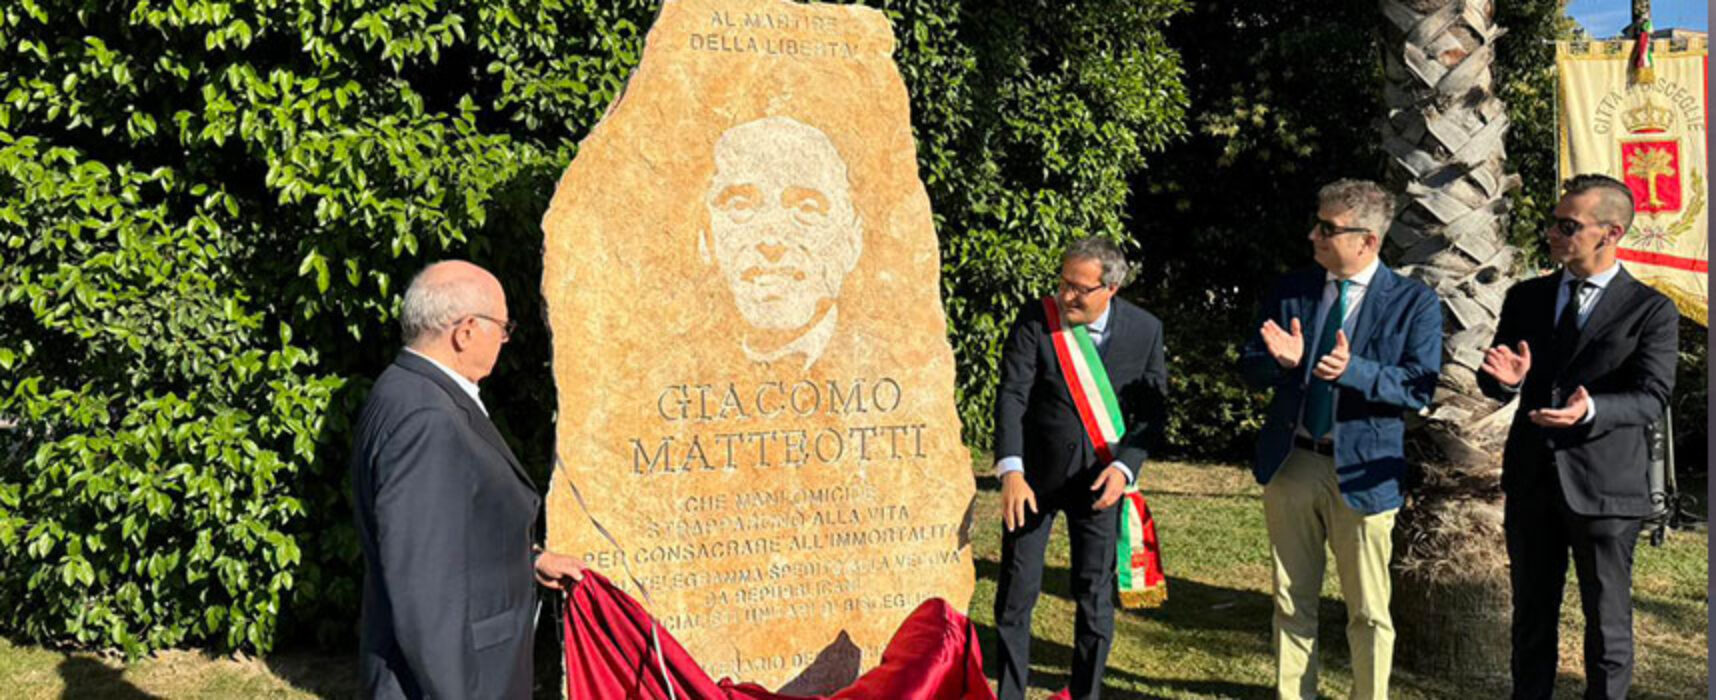 A Bisceglie inaugurata stele dedicata a Giacomo Matteotti